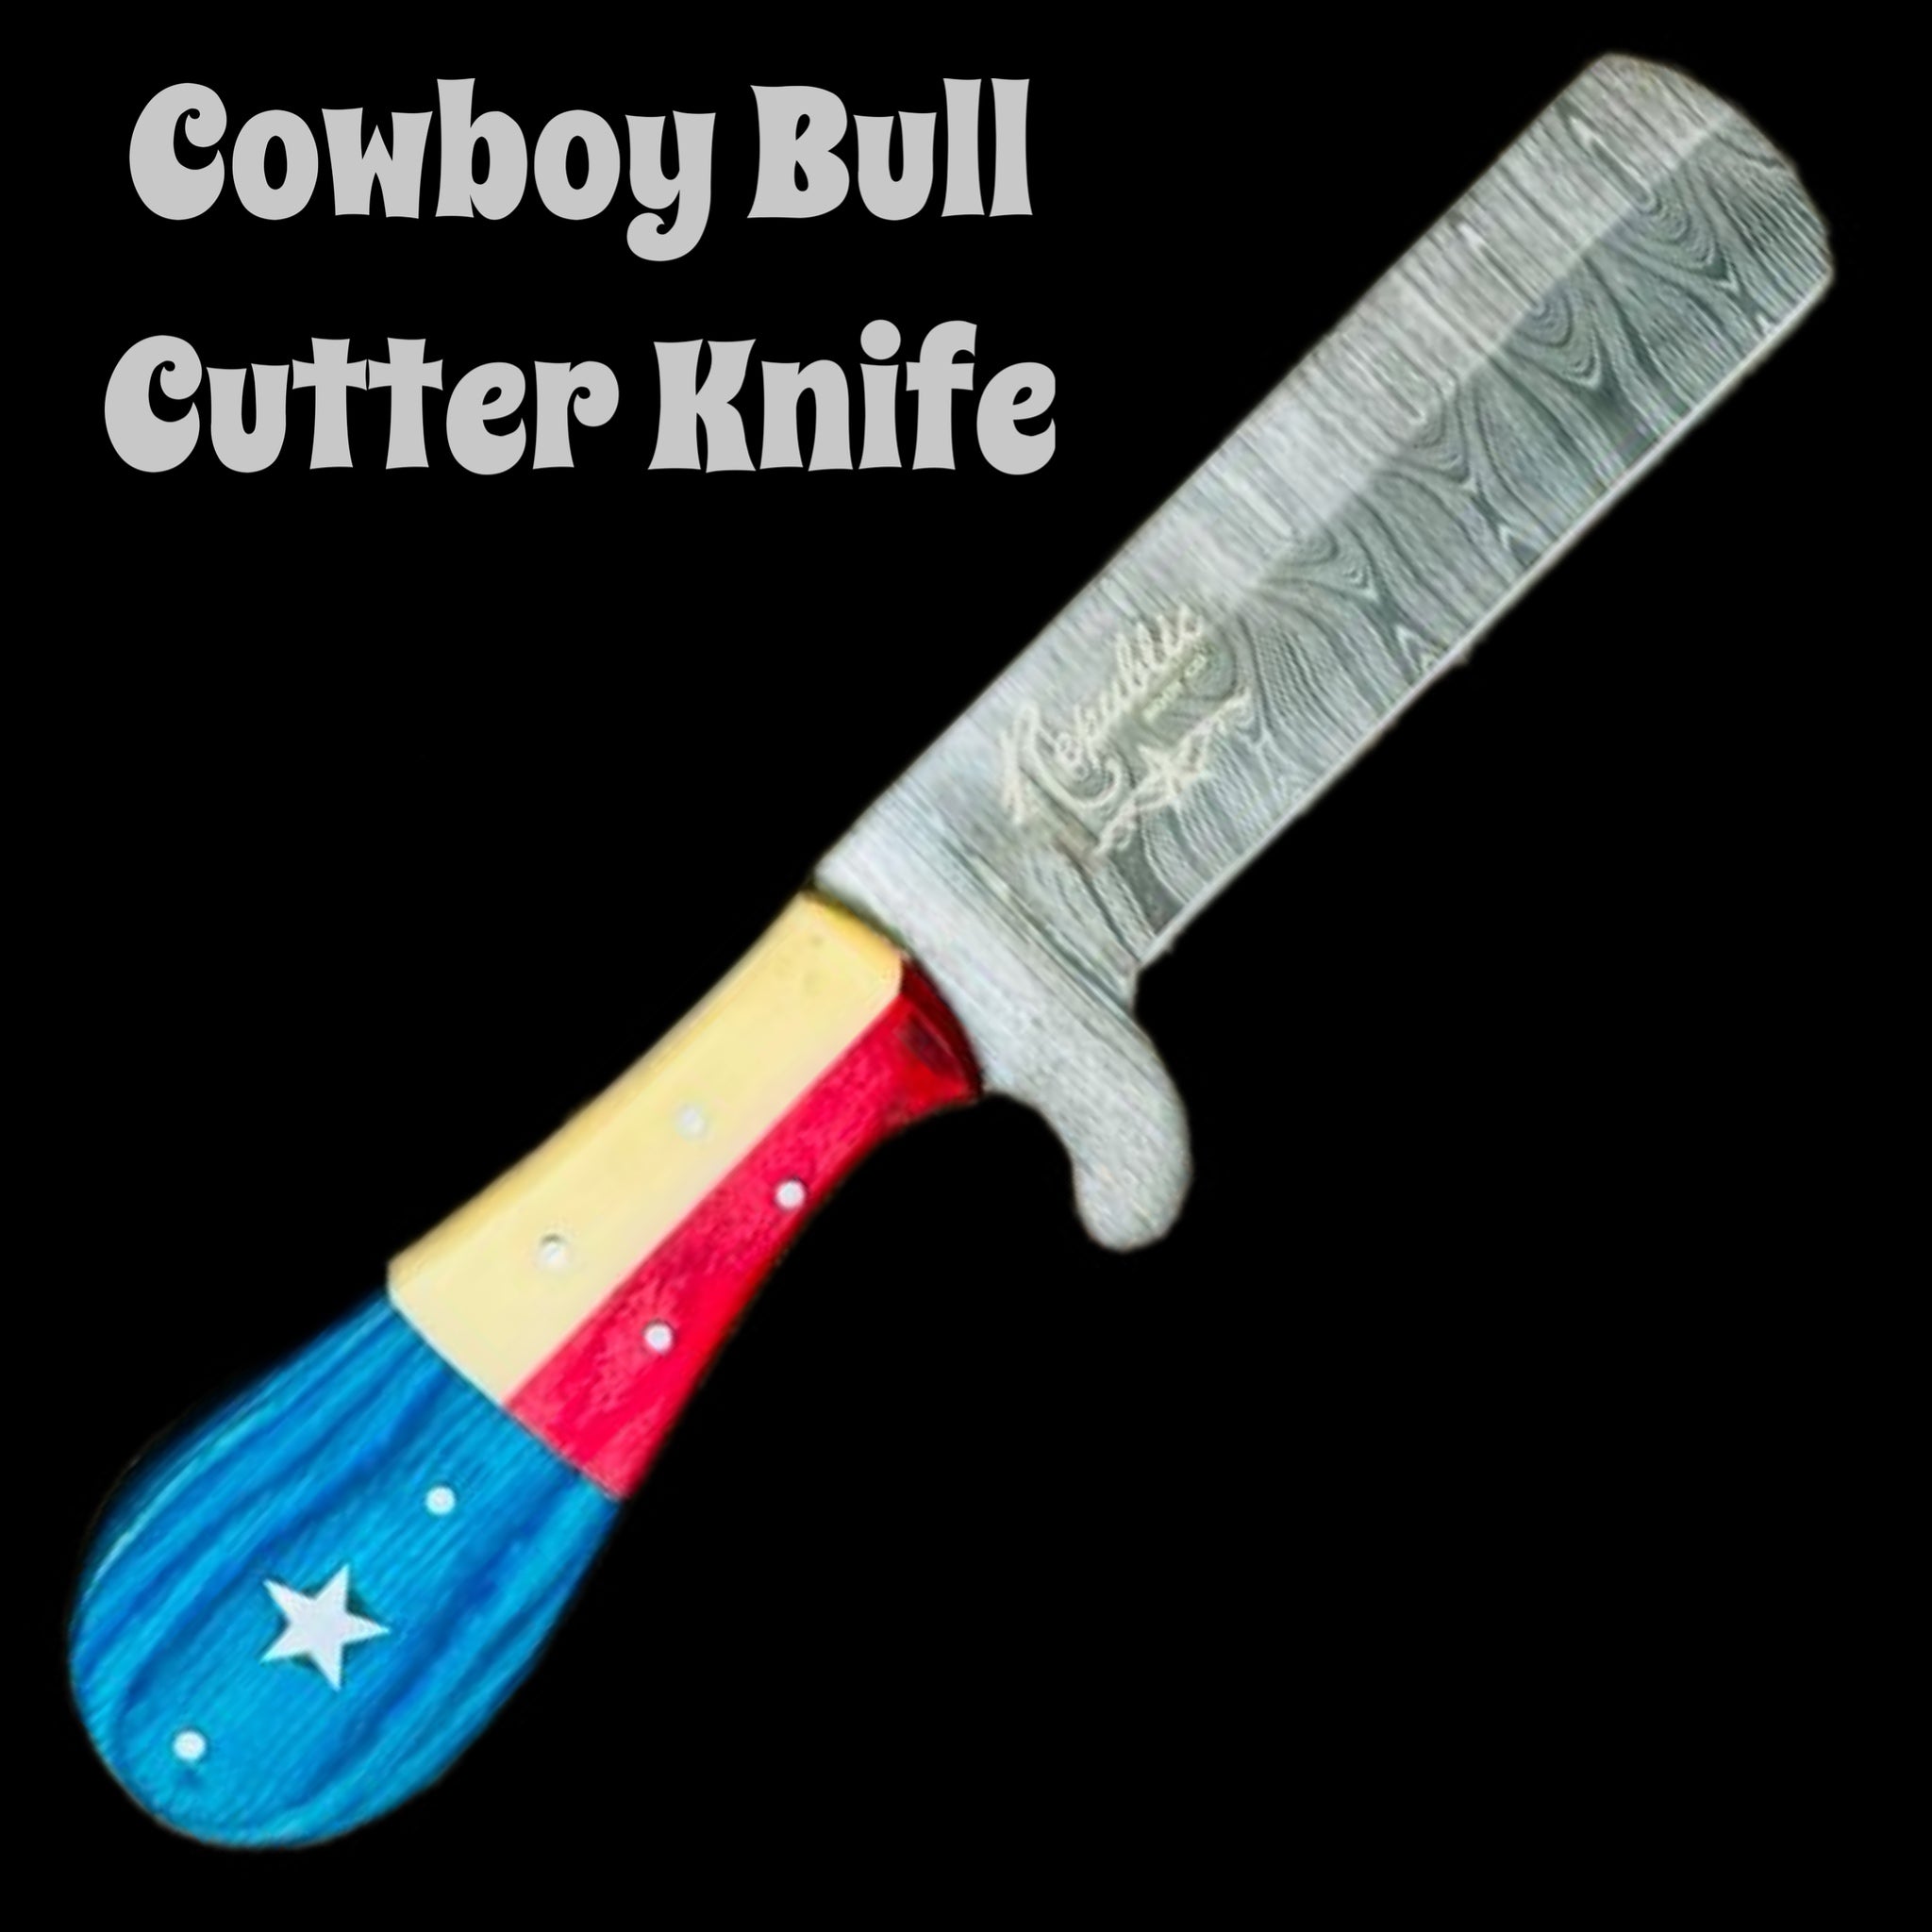 Cowboy Bull Cutter Knife